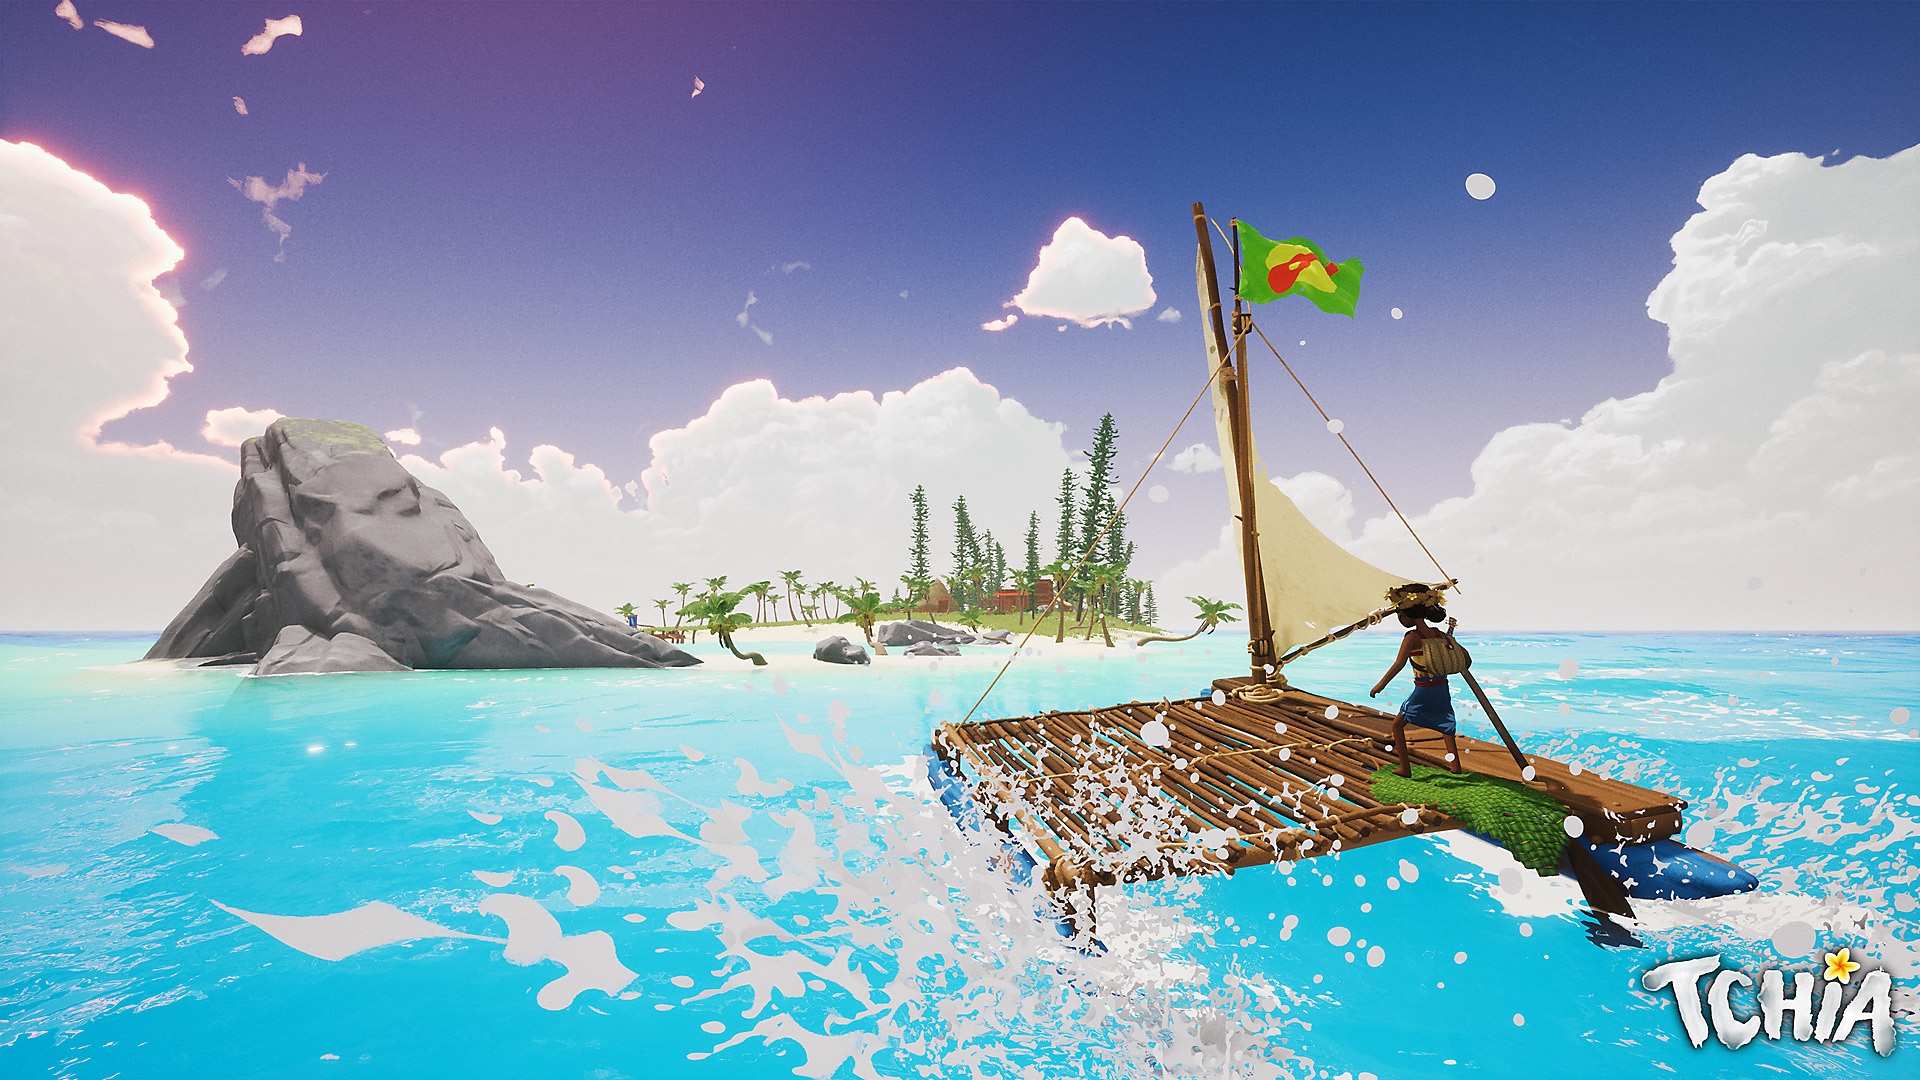 《Tchia》截屏展示了主角乘木筏驶向一座岛屿